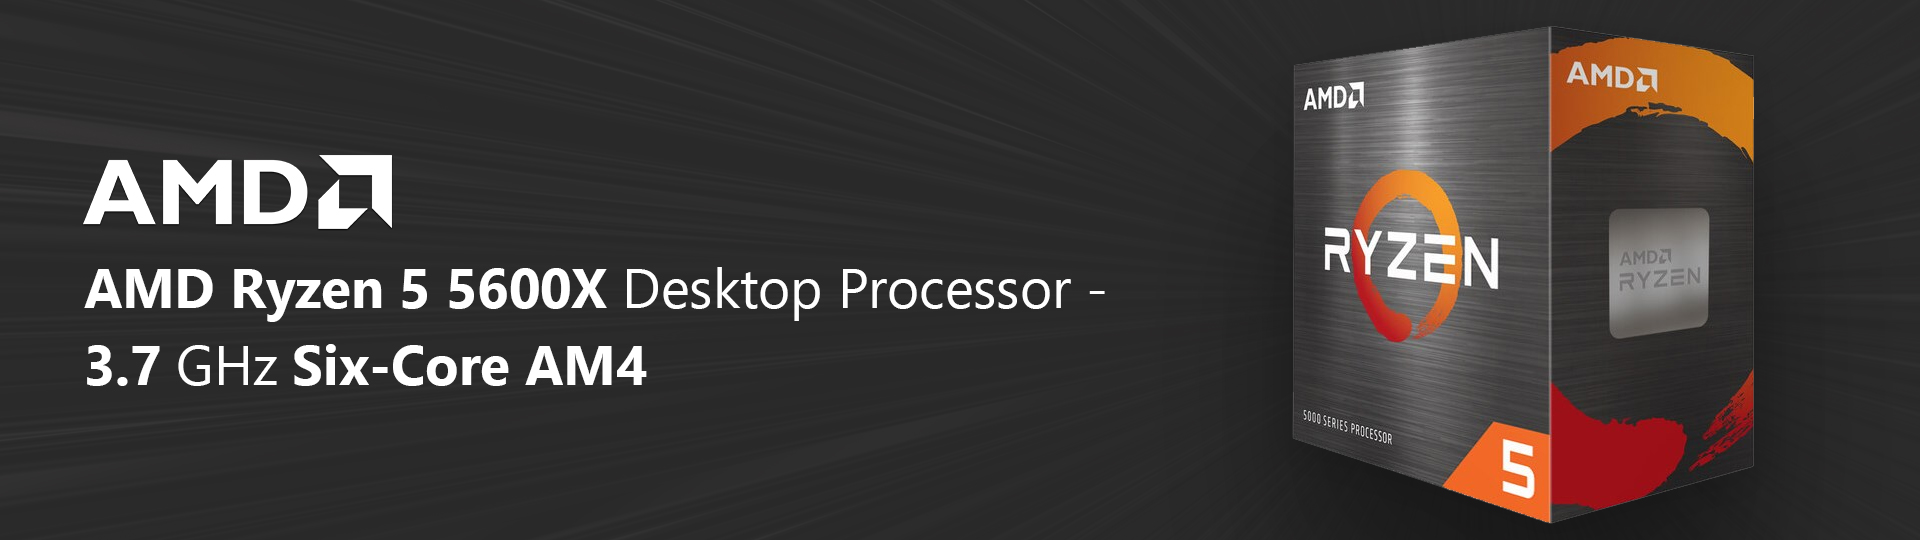 AMD Ryzen 5 5600X Desktop Processor - 3.7 GHz Six-Core AM4